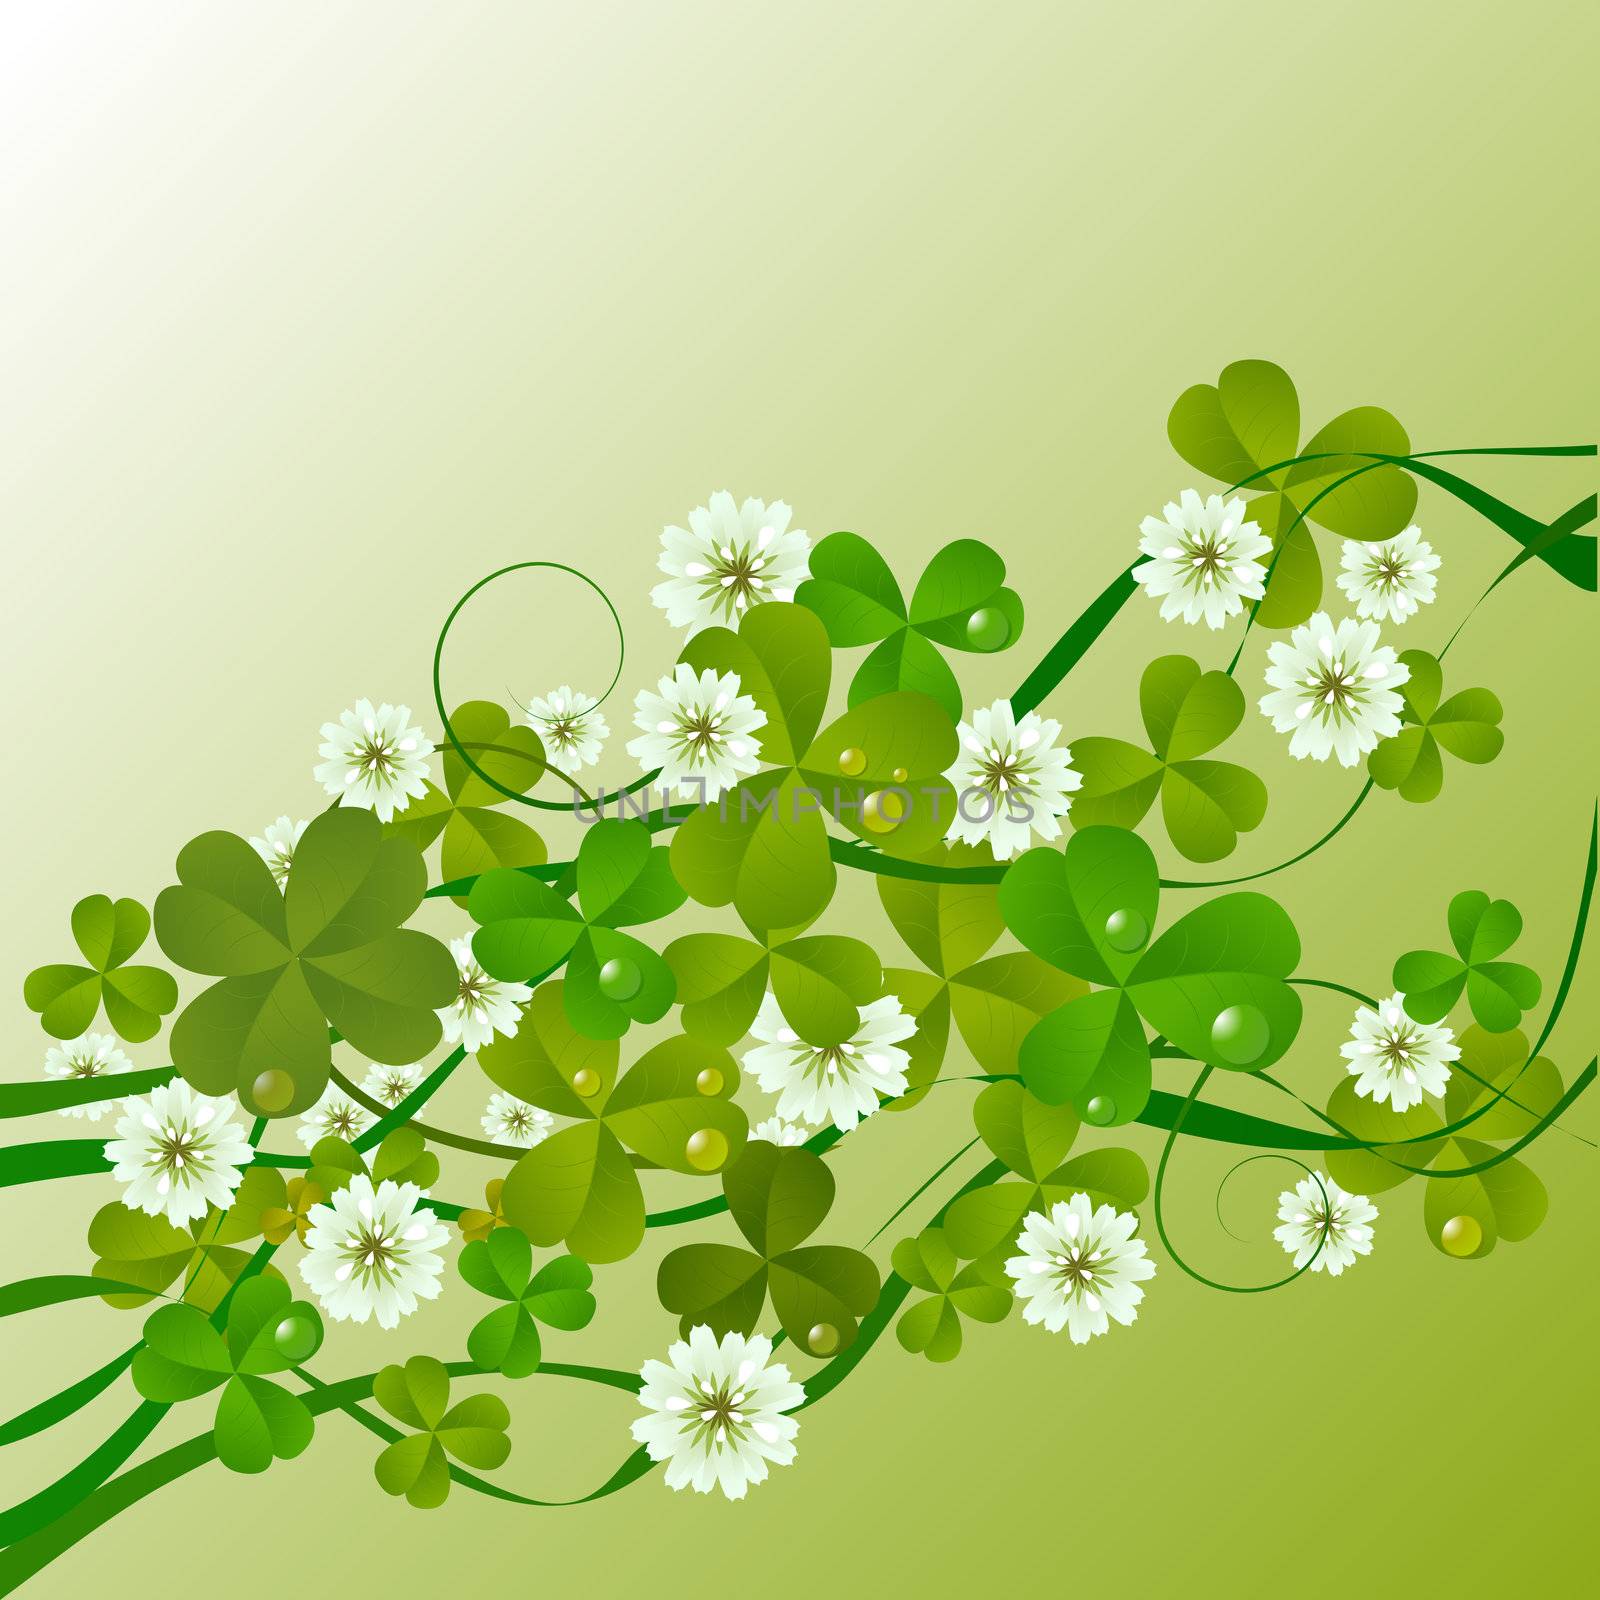 St. Patrick's Day design background